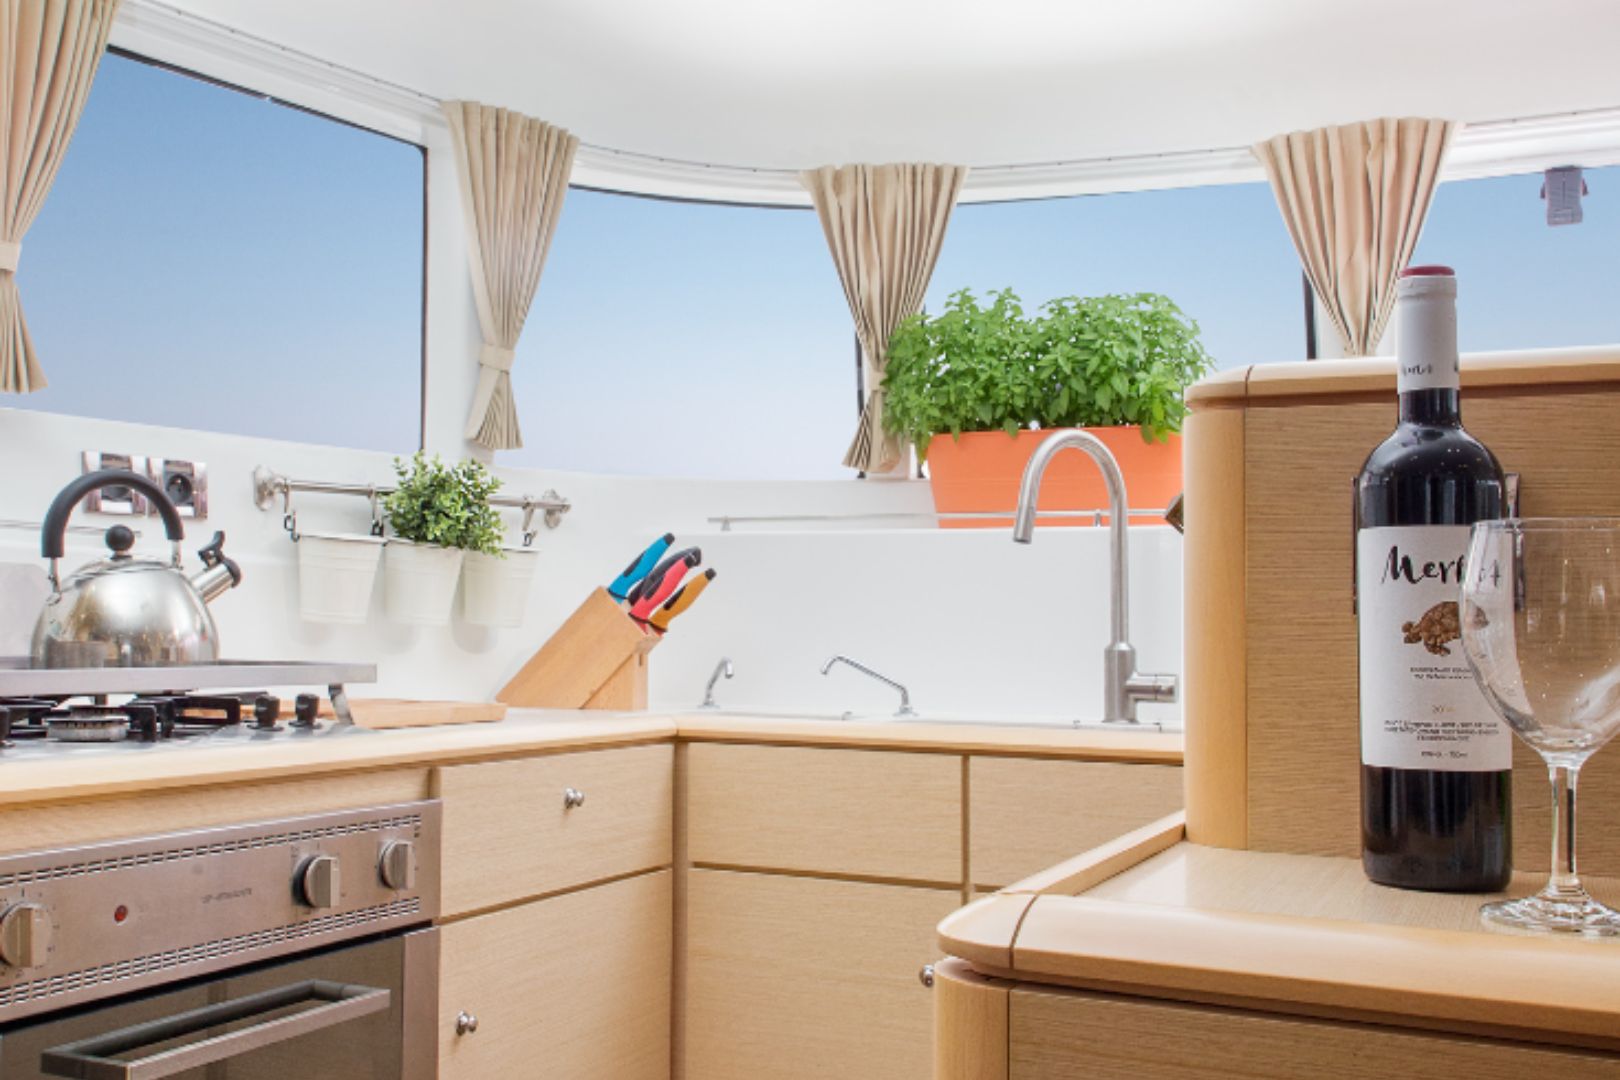 catamaran-kitchen-interior